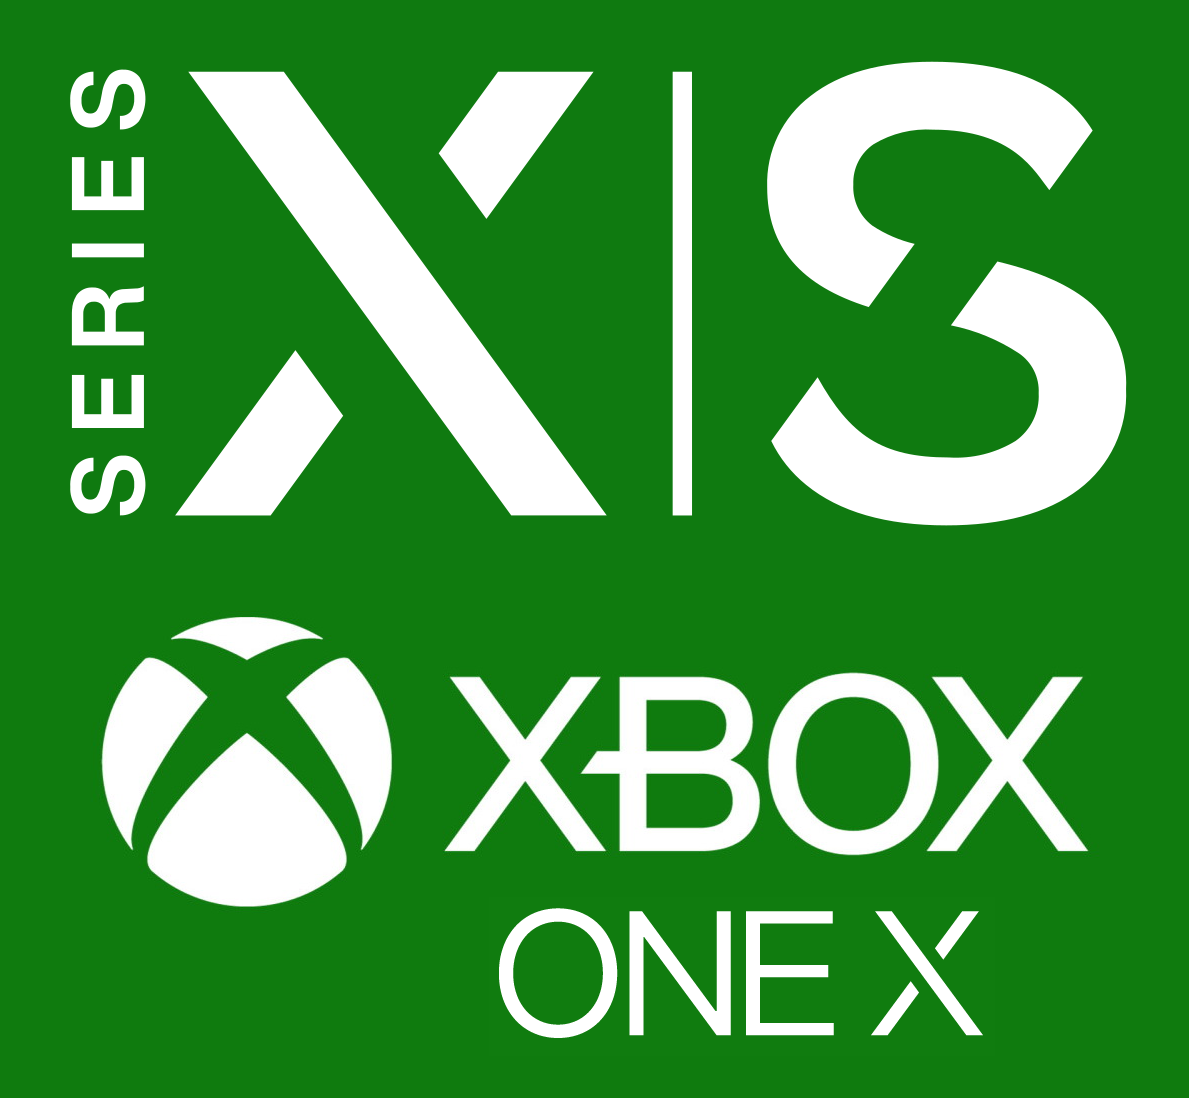 ✅ Forza Horizon 4 Ultimate Add-Ons Bundle XBOX/PC KEY🔑